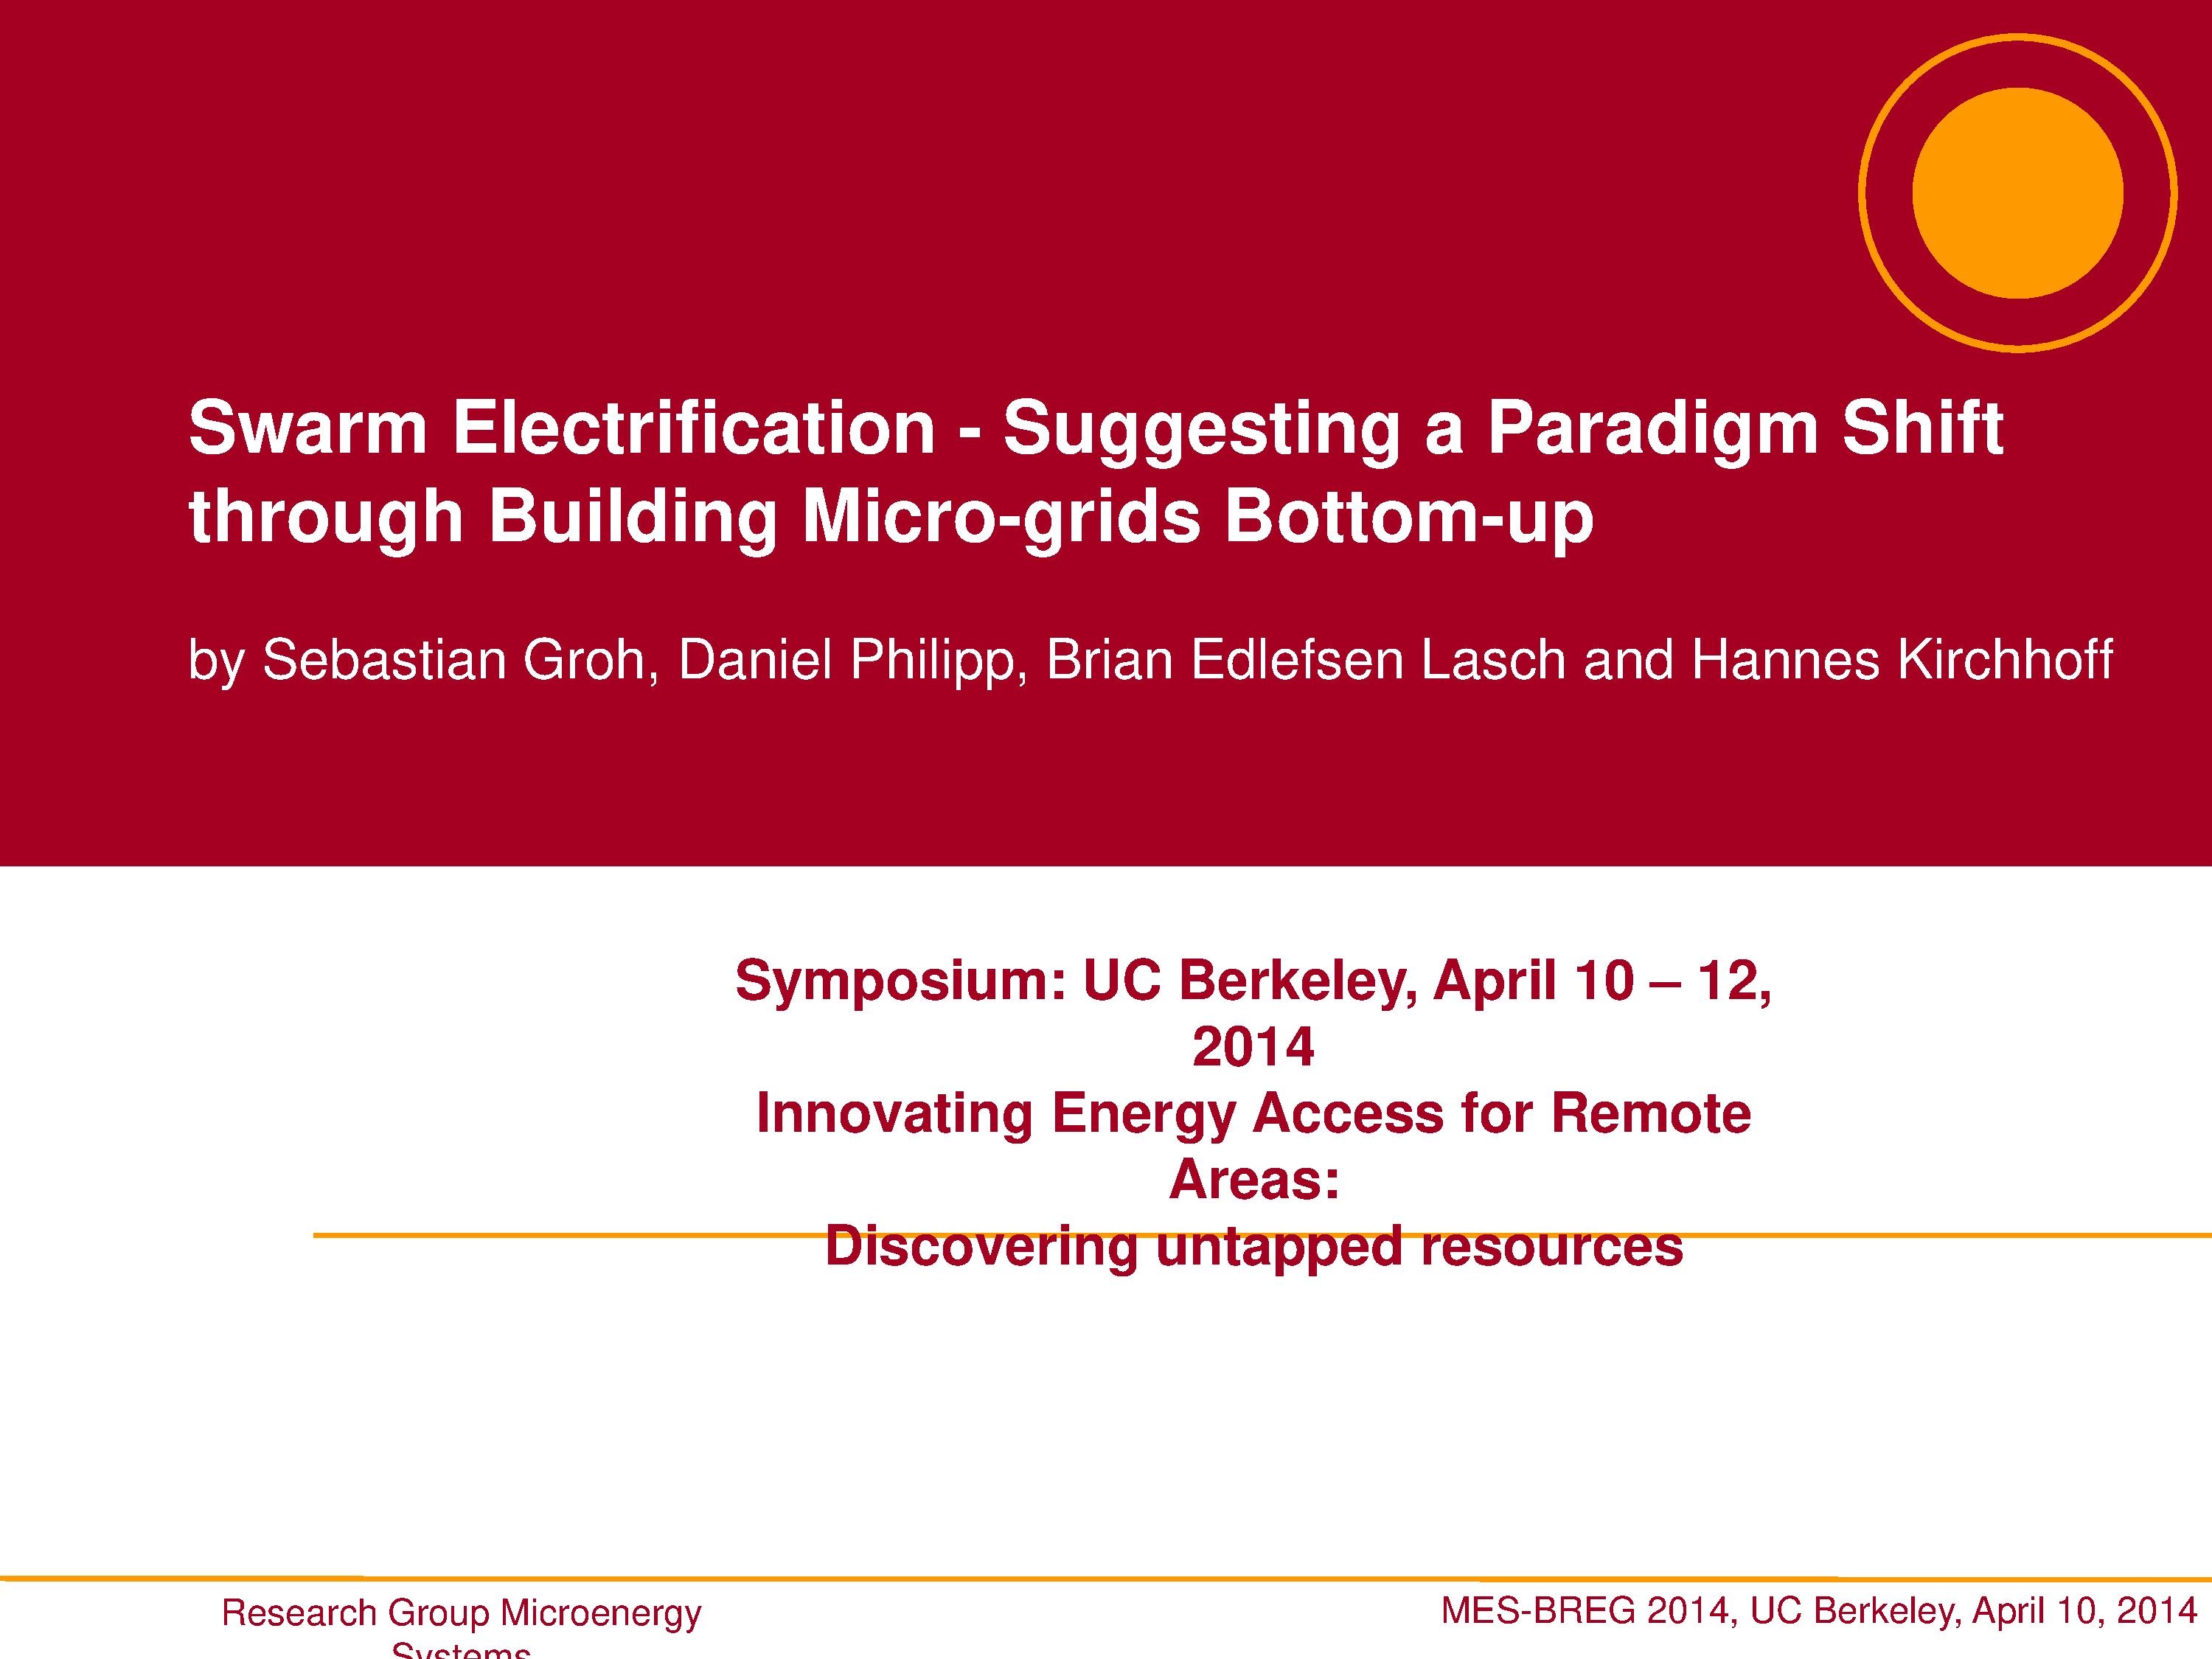 Swarm Electrification - Suggesting a Paradigm Shift through Building Micro-grids Bottom-up.pdf